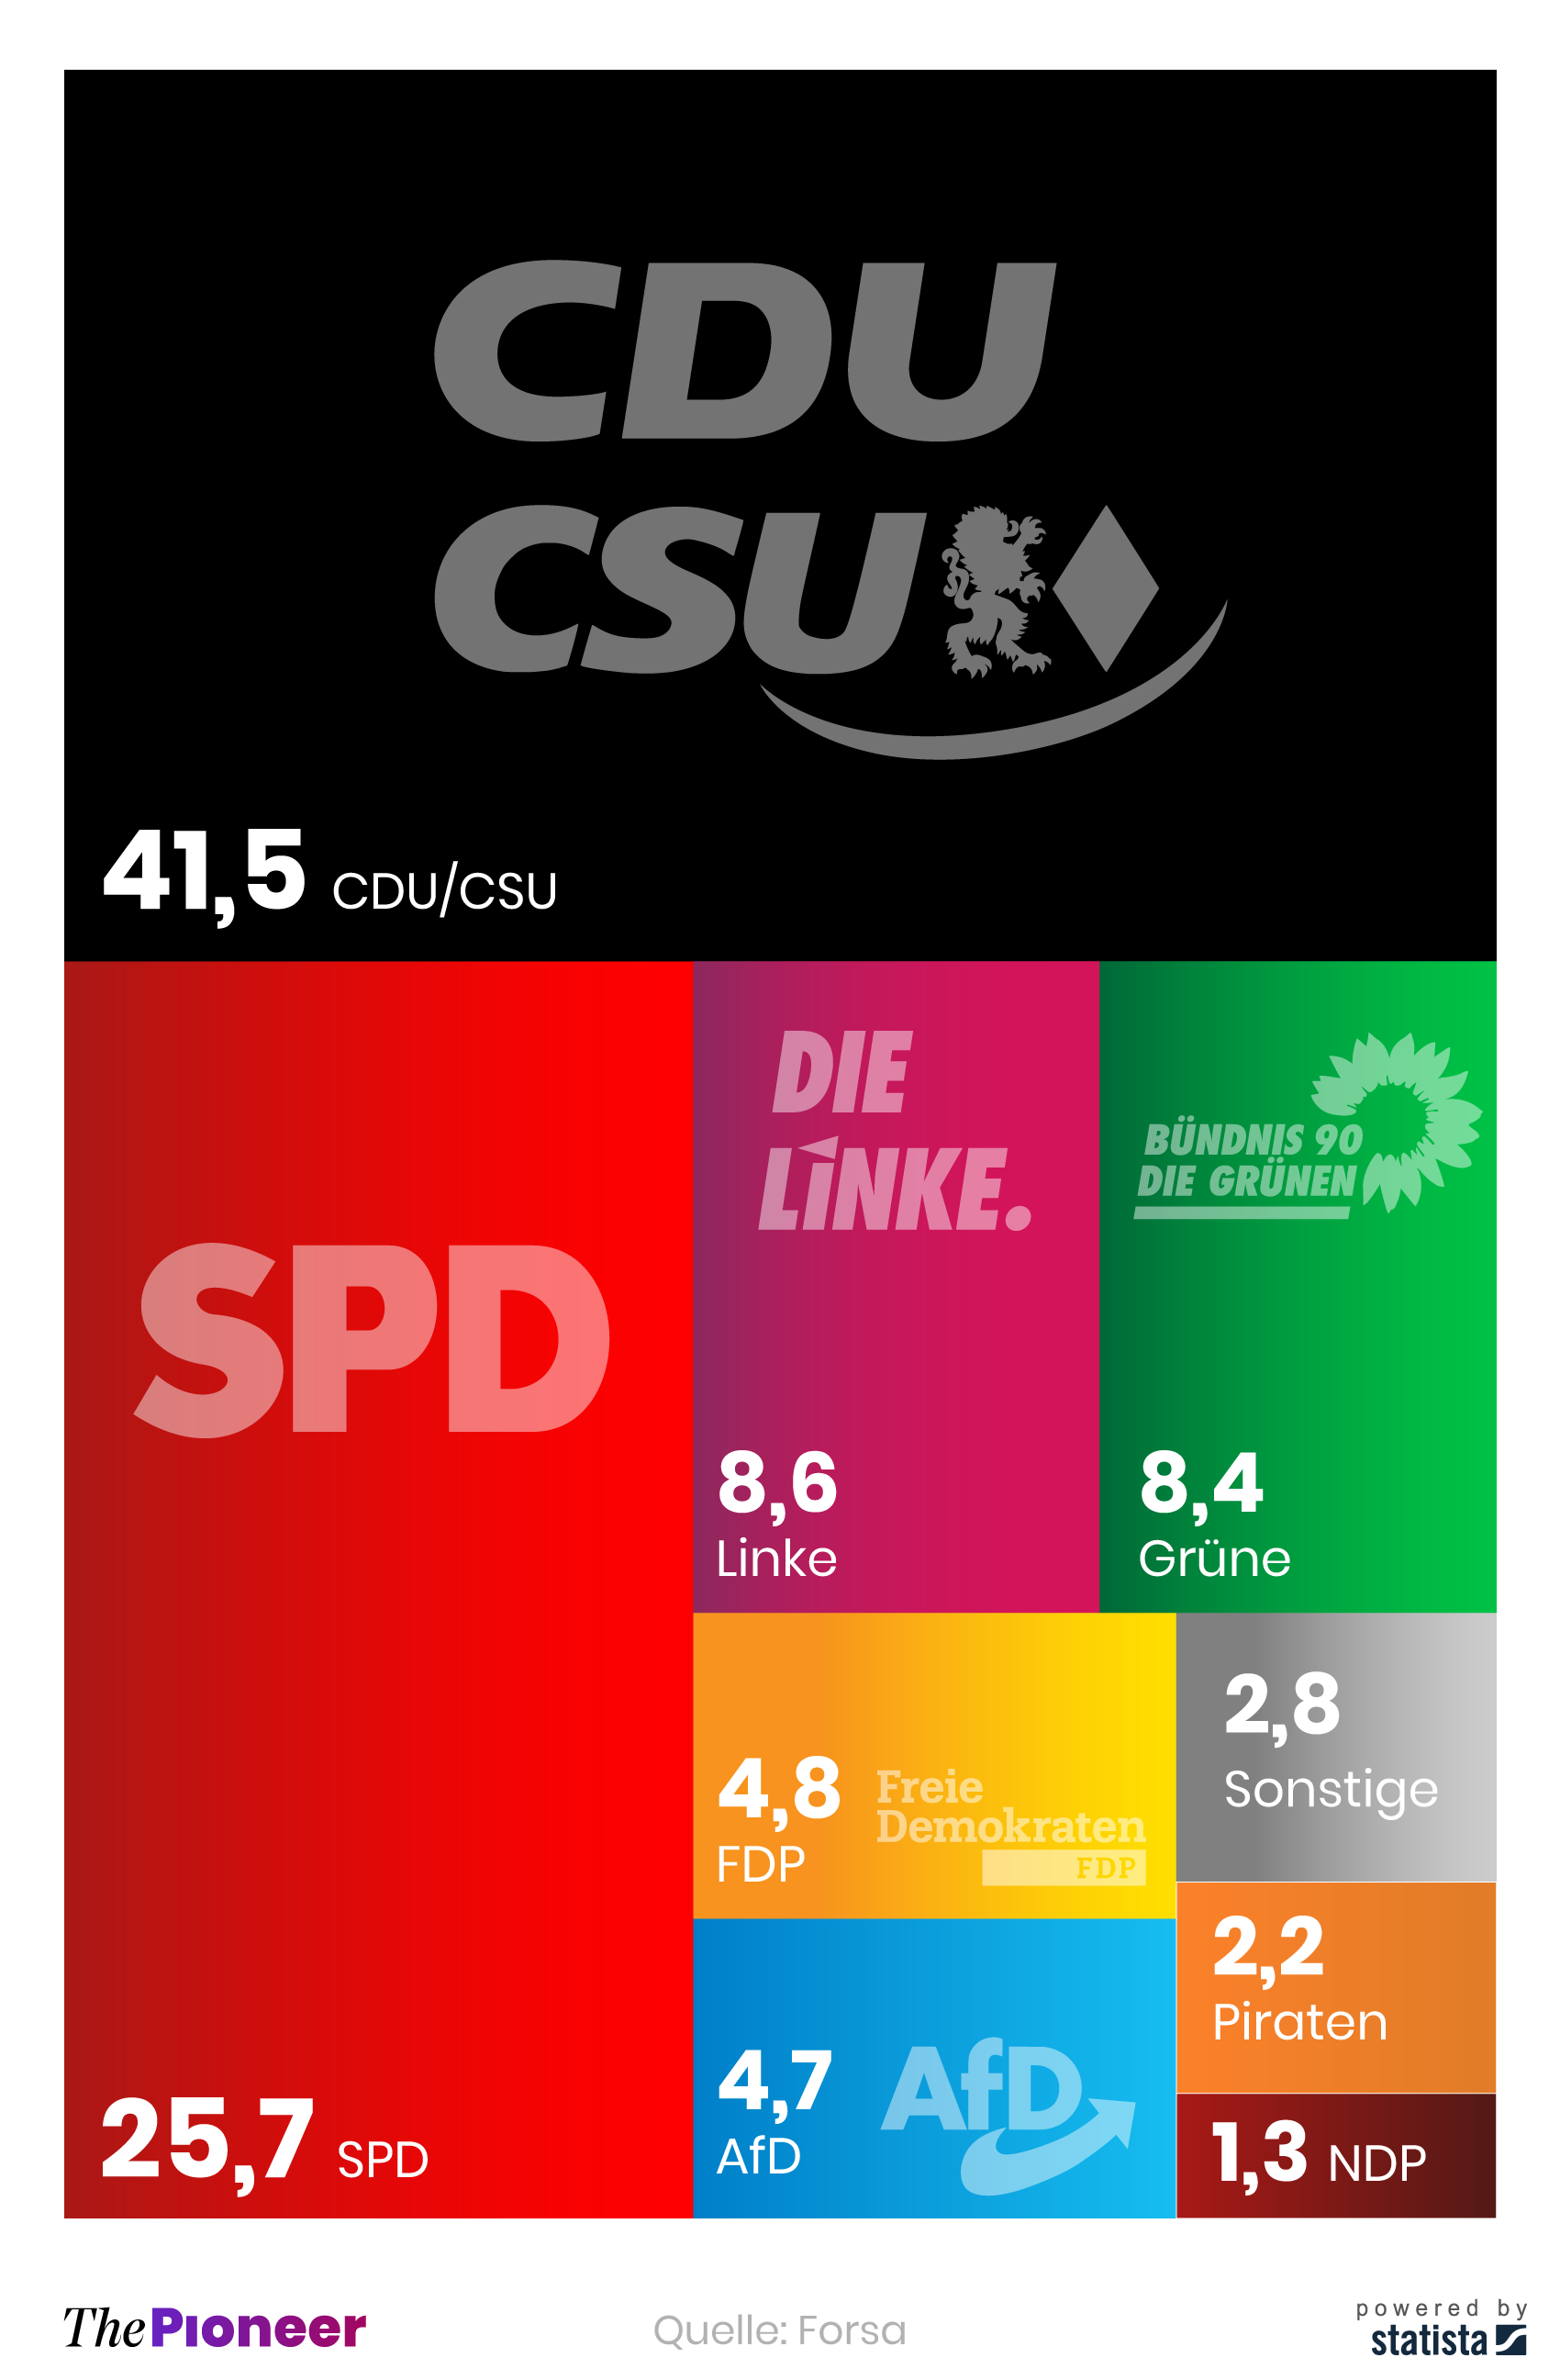  Ergebnis der Bundestagswahl am 22. September 2013, in Prozent